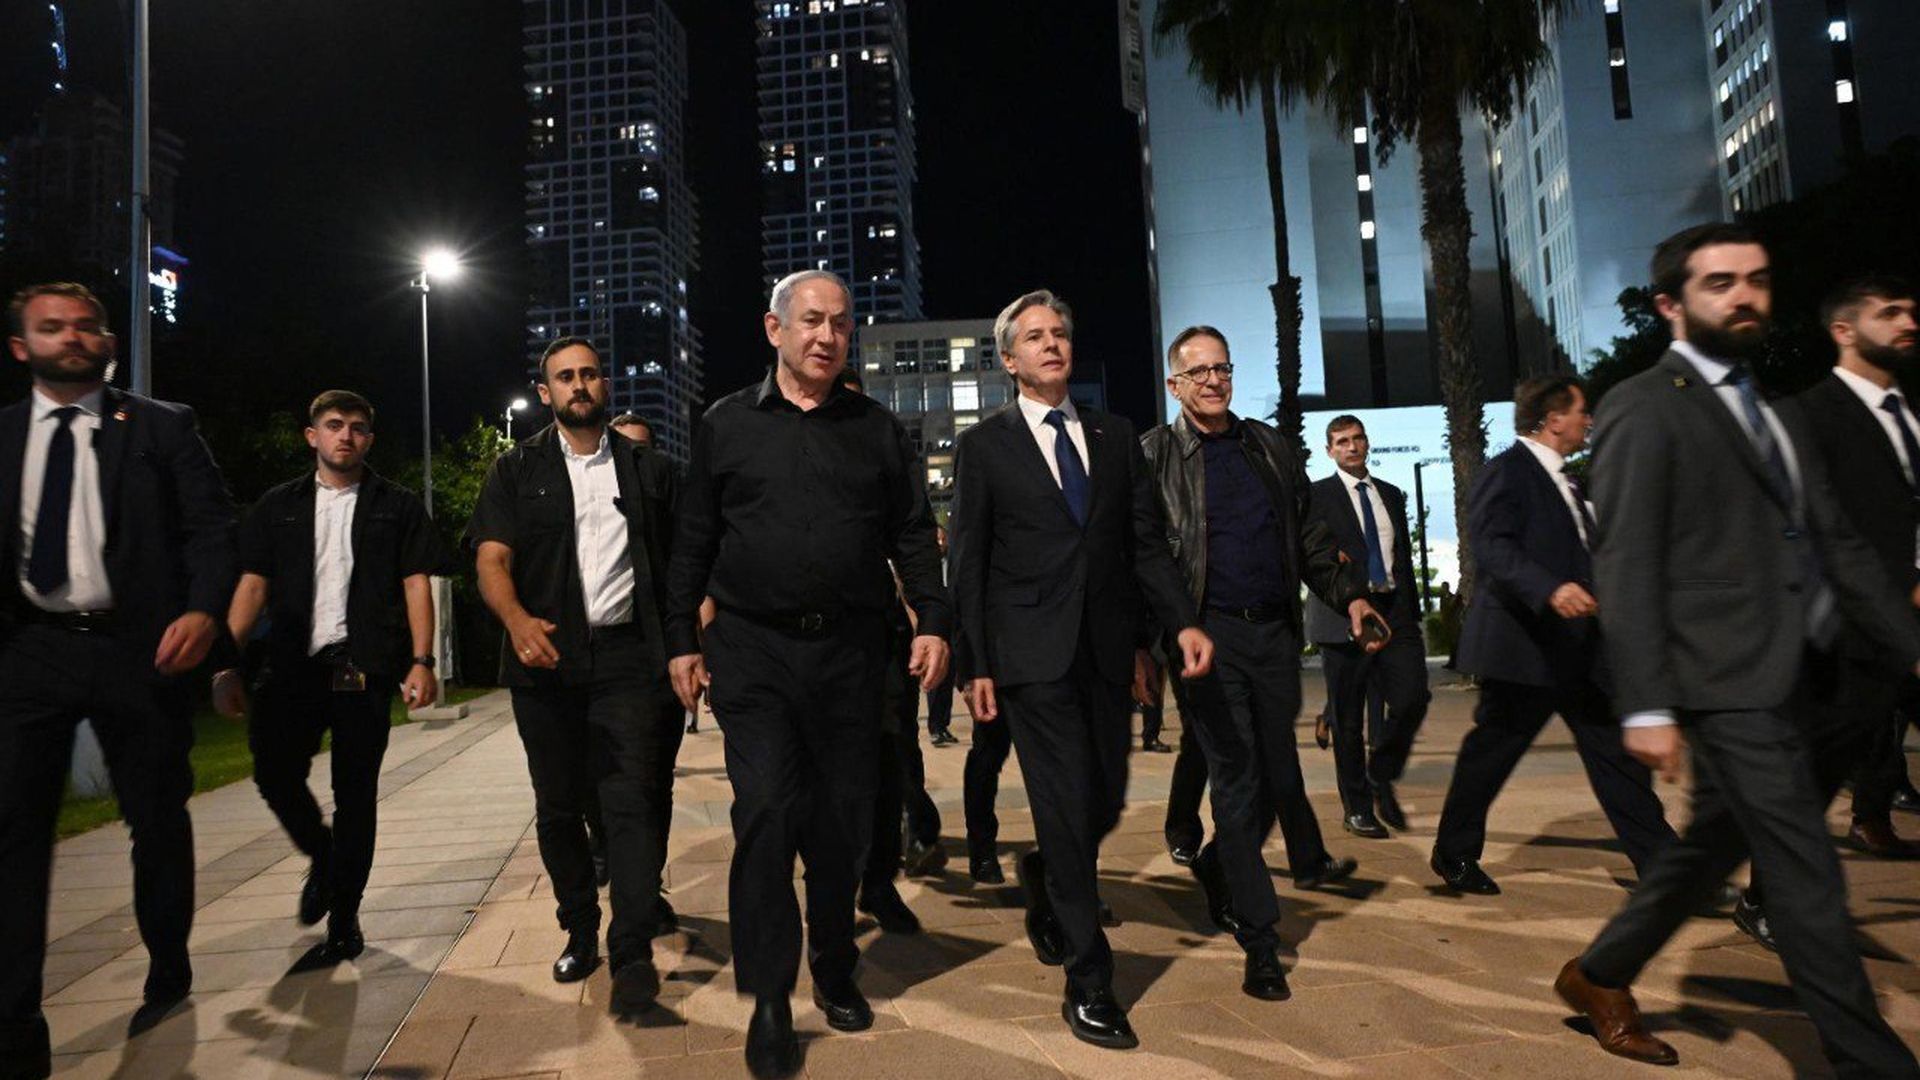 Israeli Benjamin Netanyahu, in all black, walks with U.S. Secretary of Antony Blinken and security personnel